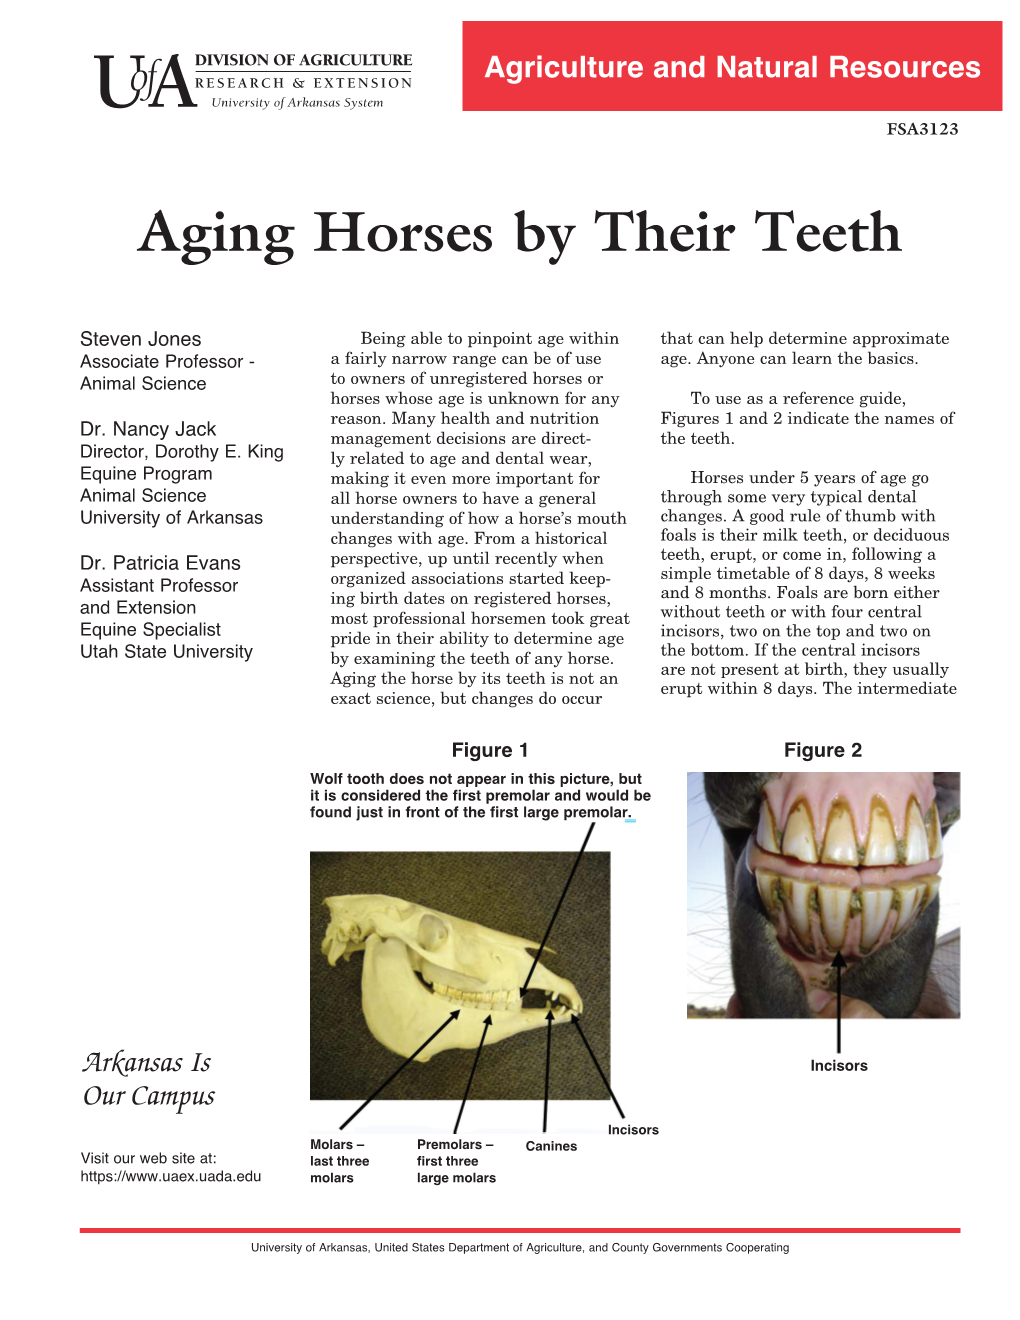 Aging Horses by Their Teeth FSA3123